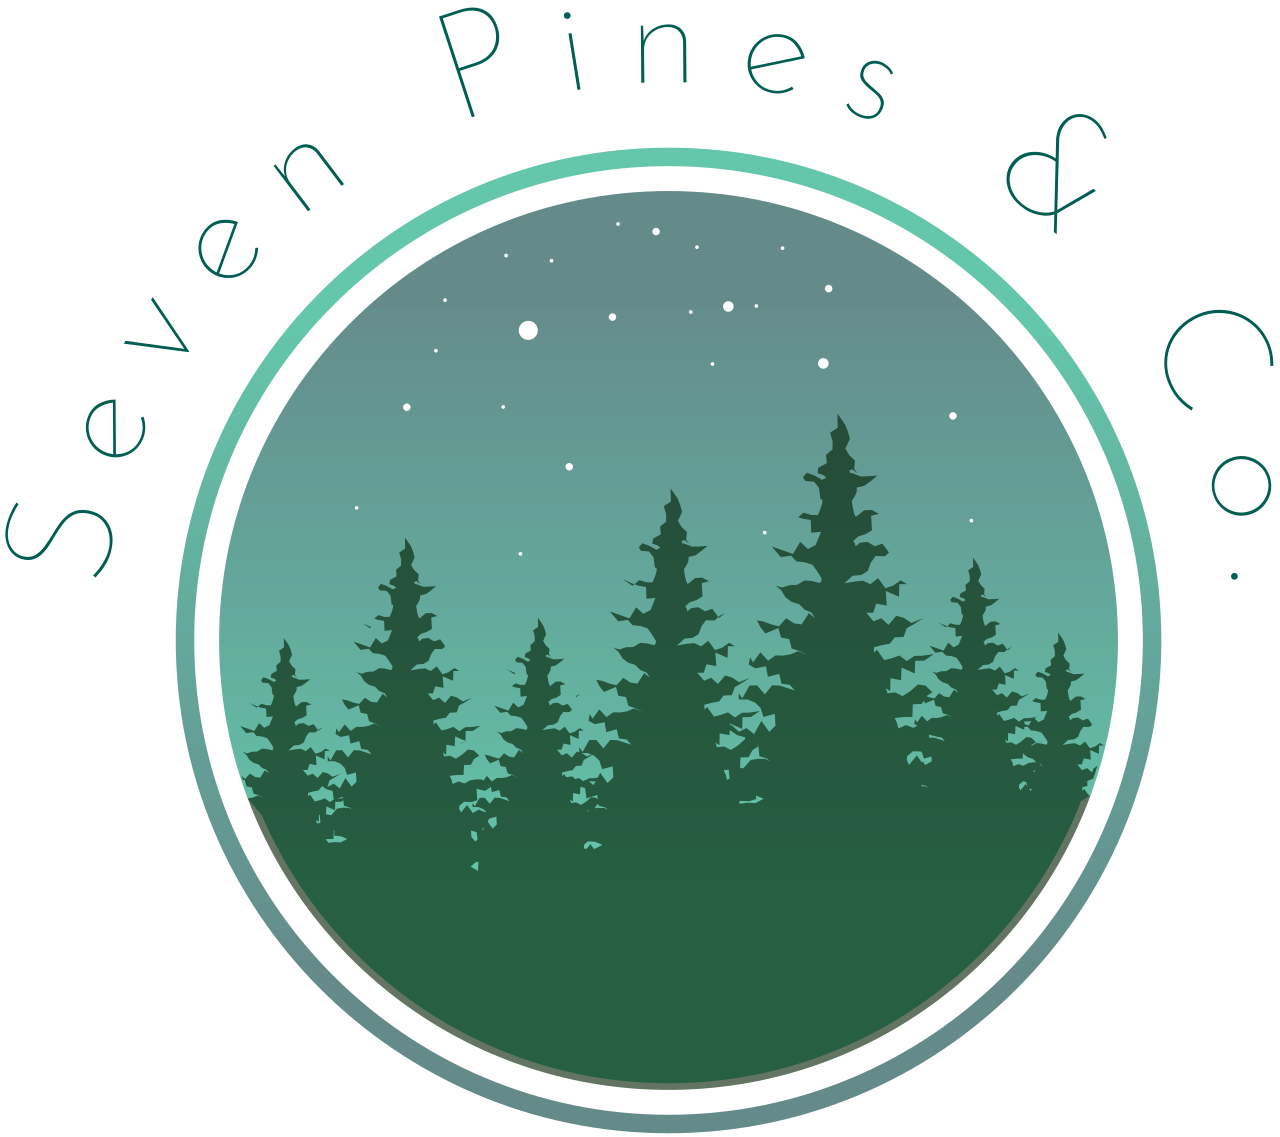 Seven Pines & Co.'s logo